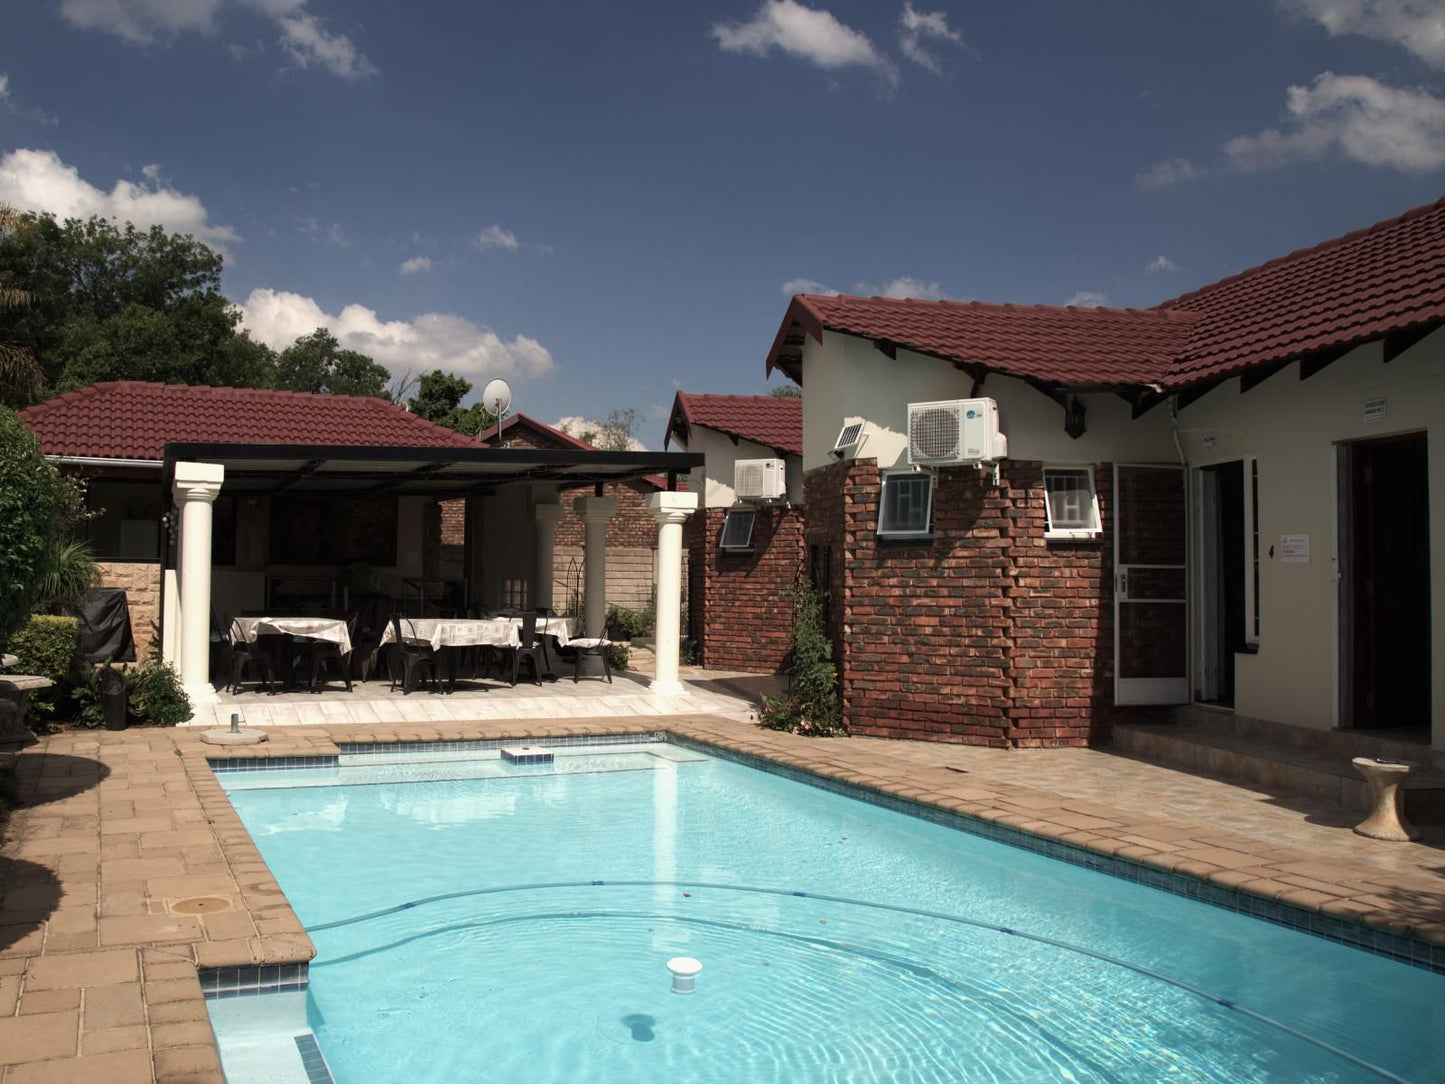 Xaviera Guest House Garsfontein Pretoria Tshwane Gauteng South Africa House, Building, Architecture, Swimming Pool